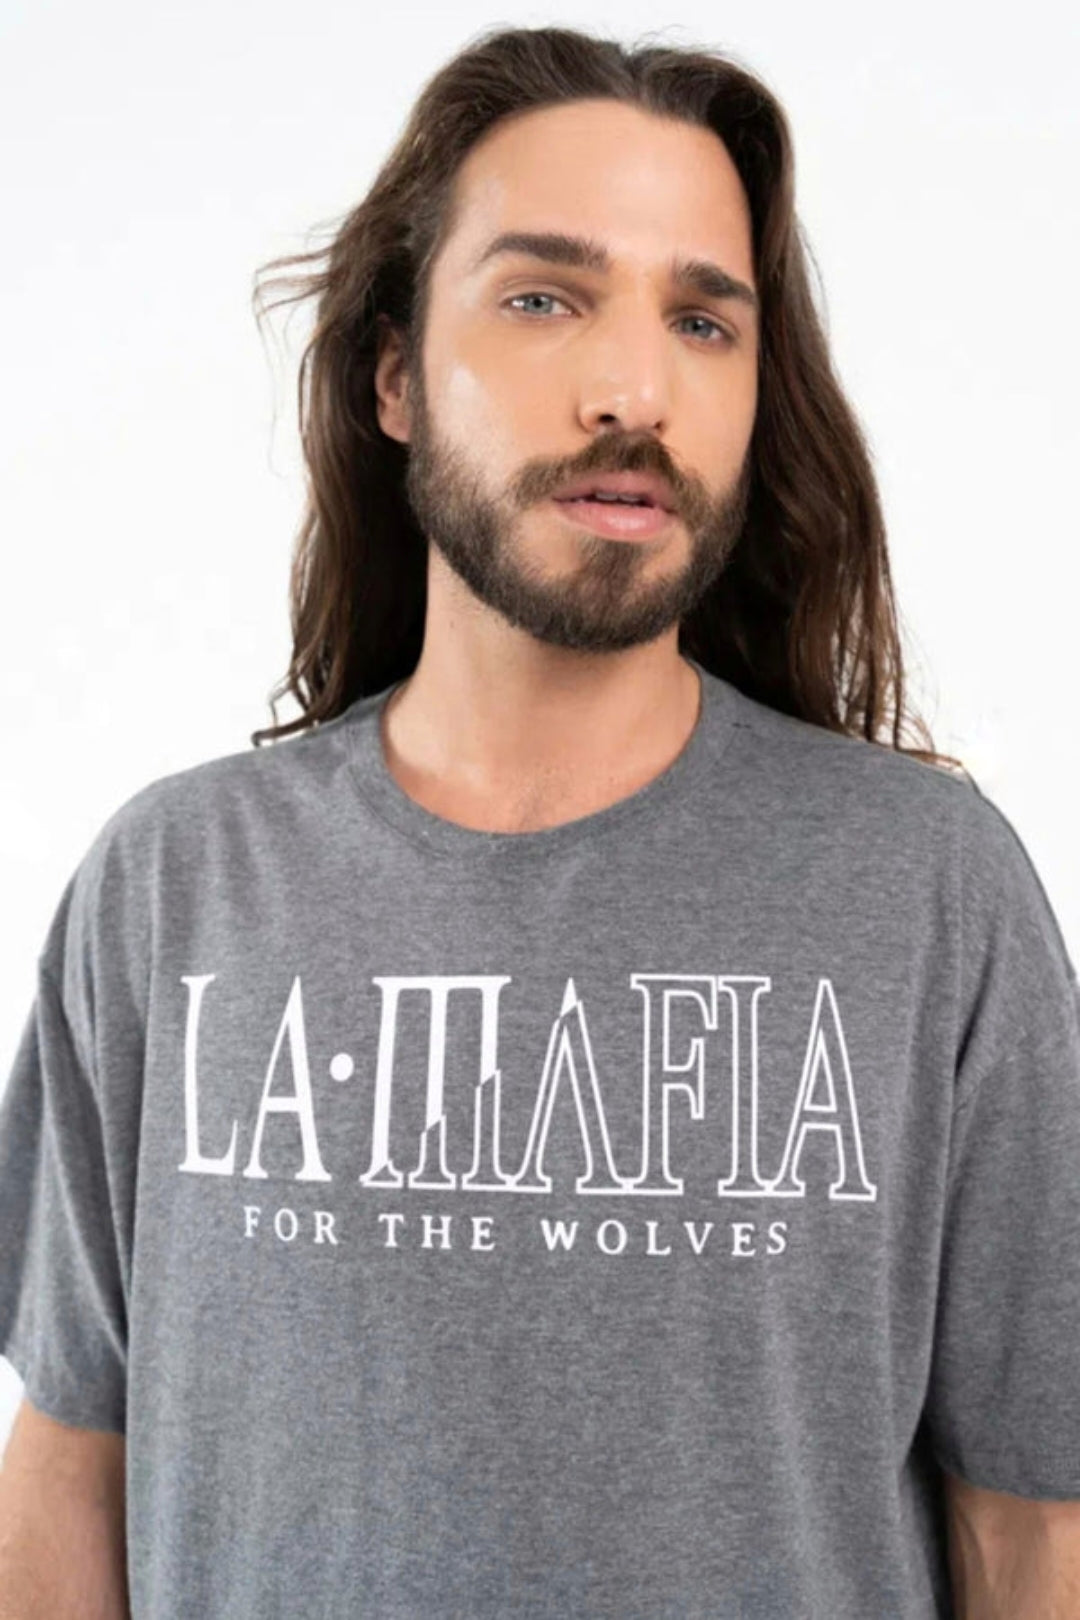 Shirt La Mafia Grey